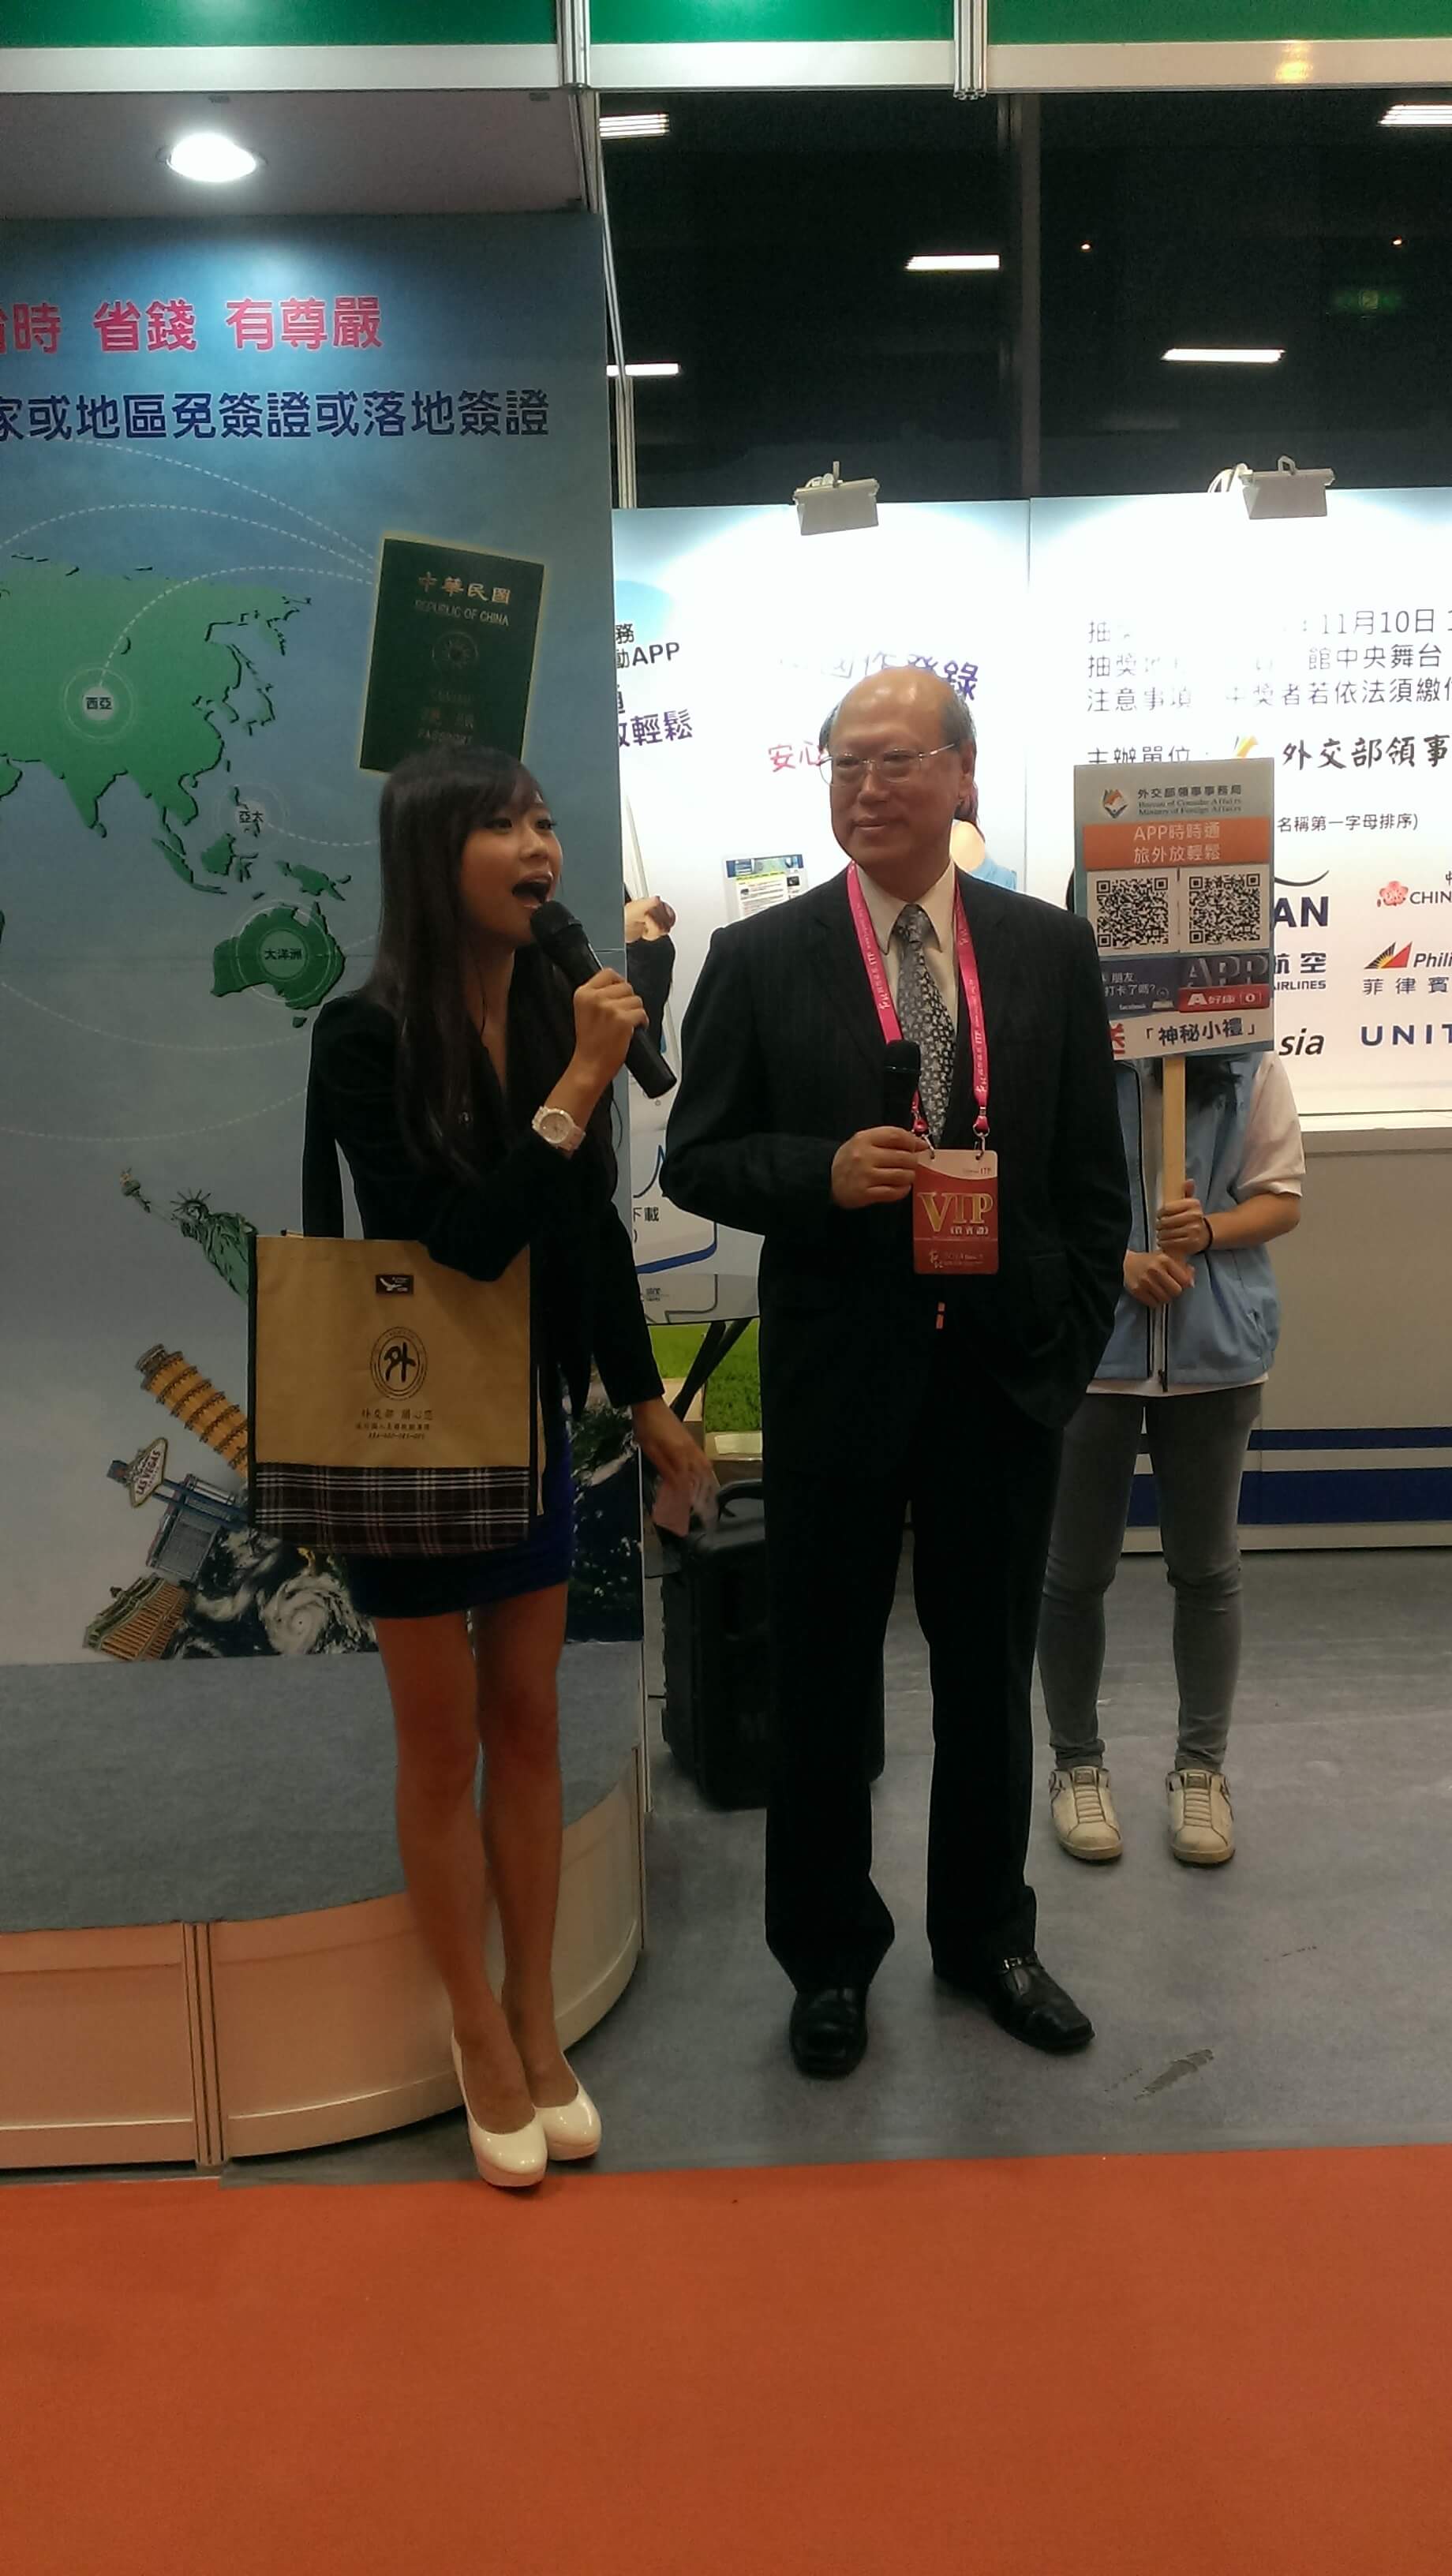 BOCA Participated in the Taipei International Travel Fair from November 7-10, 2014